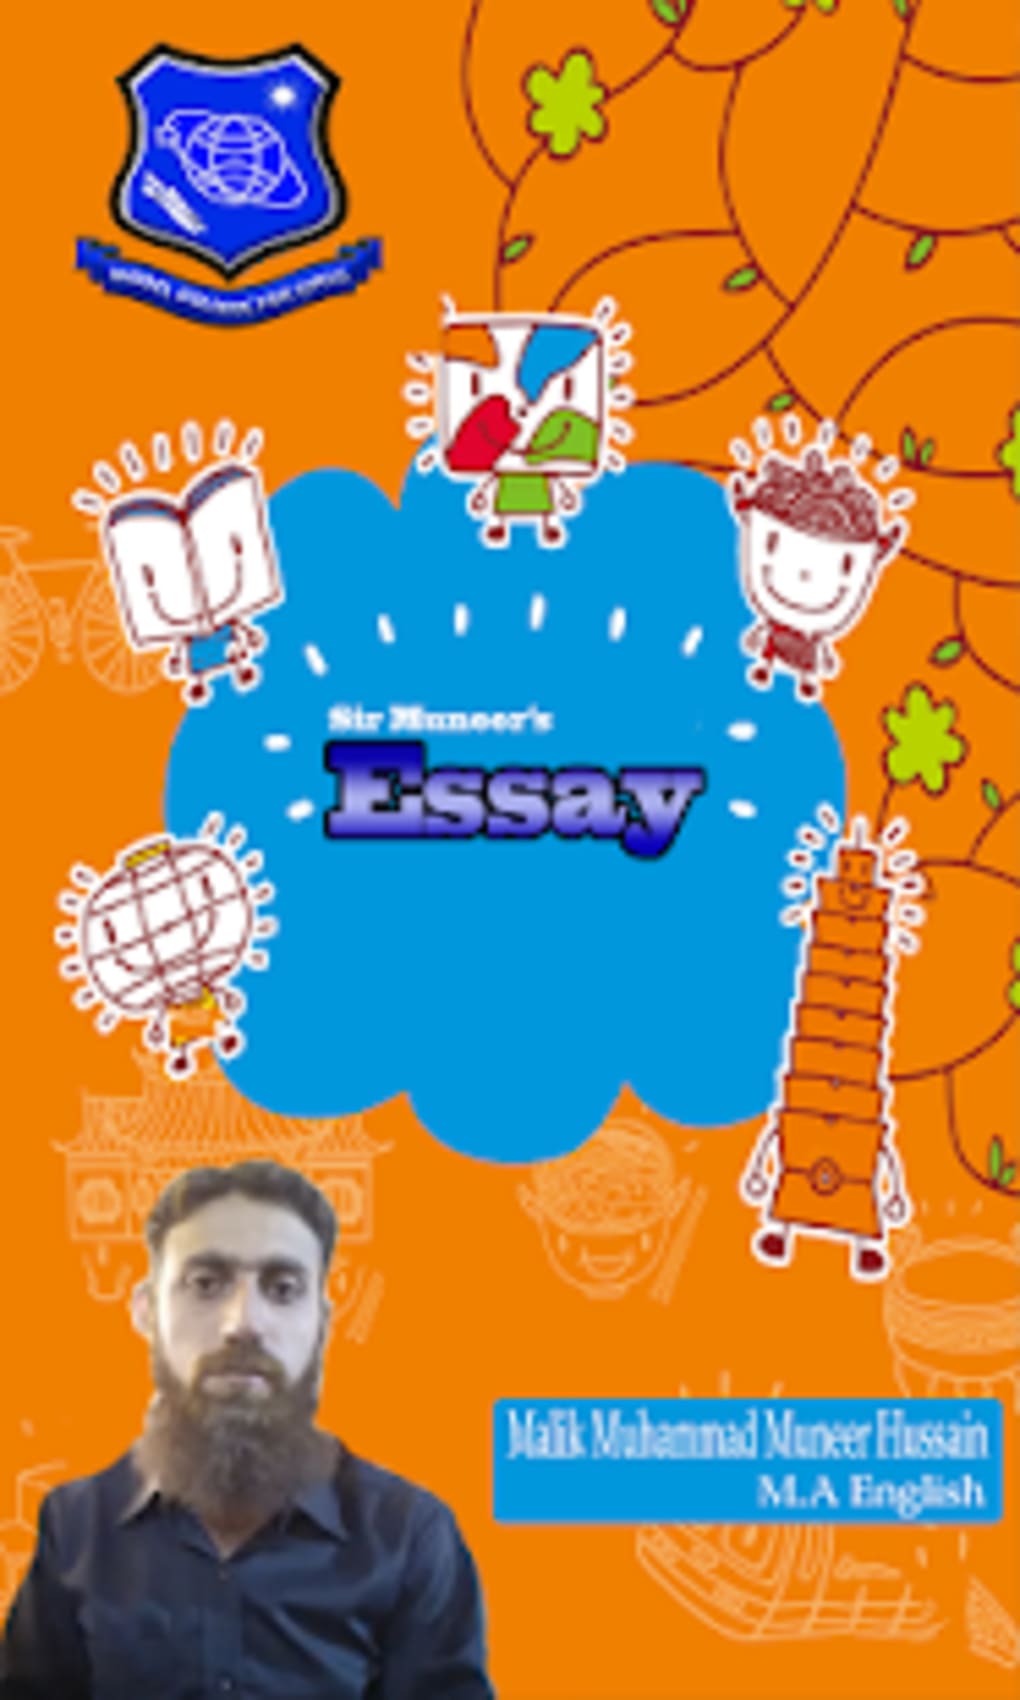 english essay app free download